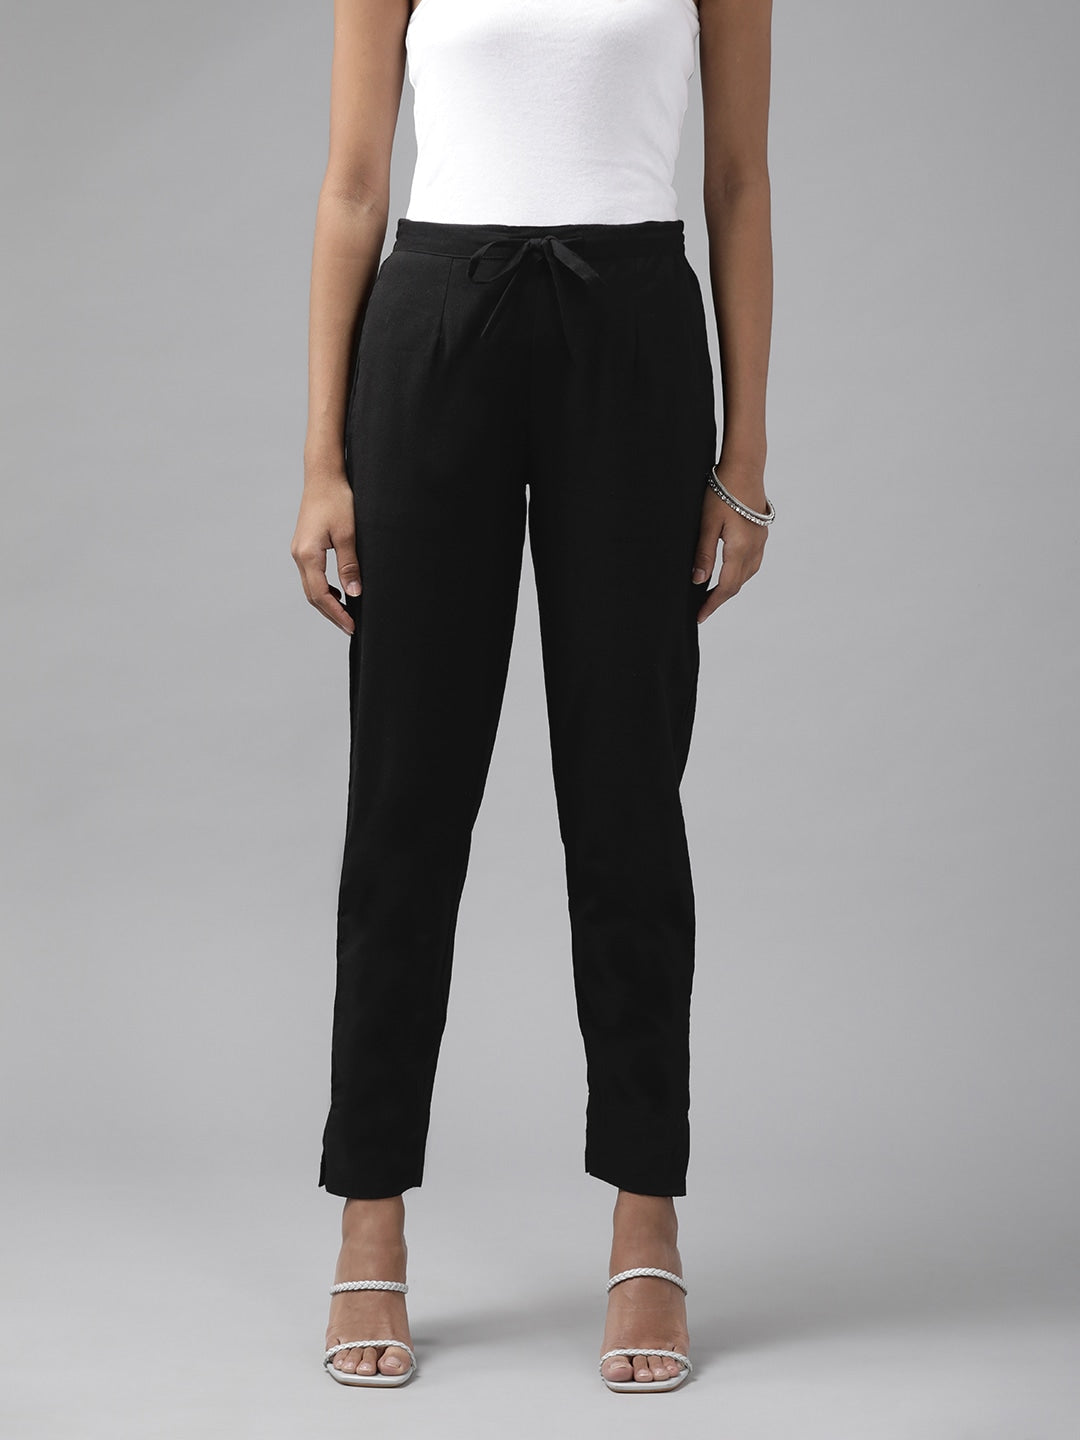 Black Cotton Fit Trousers-Yufta Store-4206PNTBKS